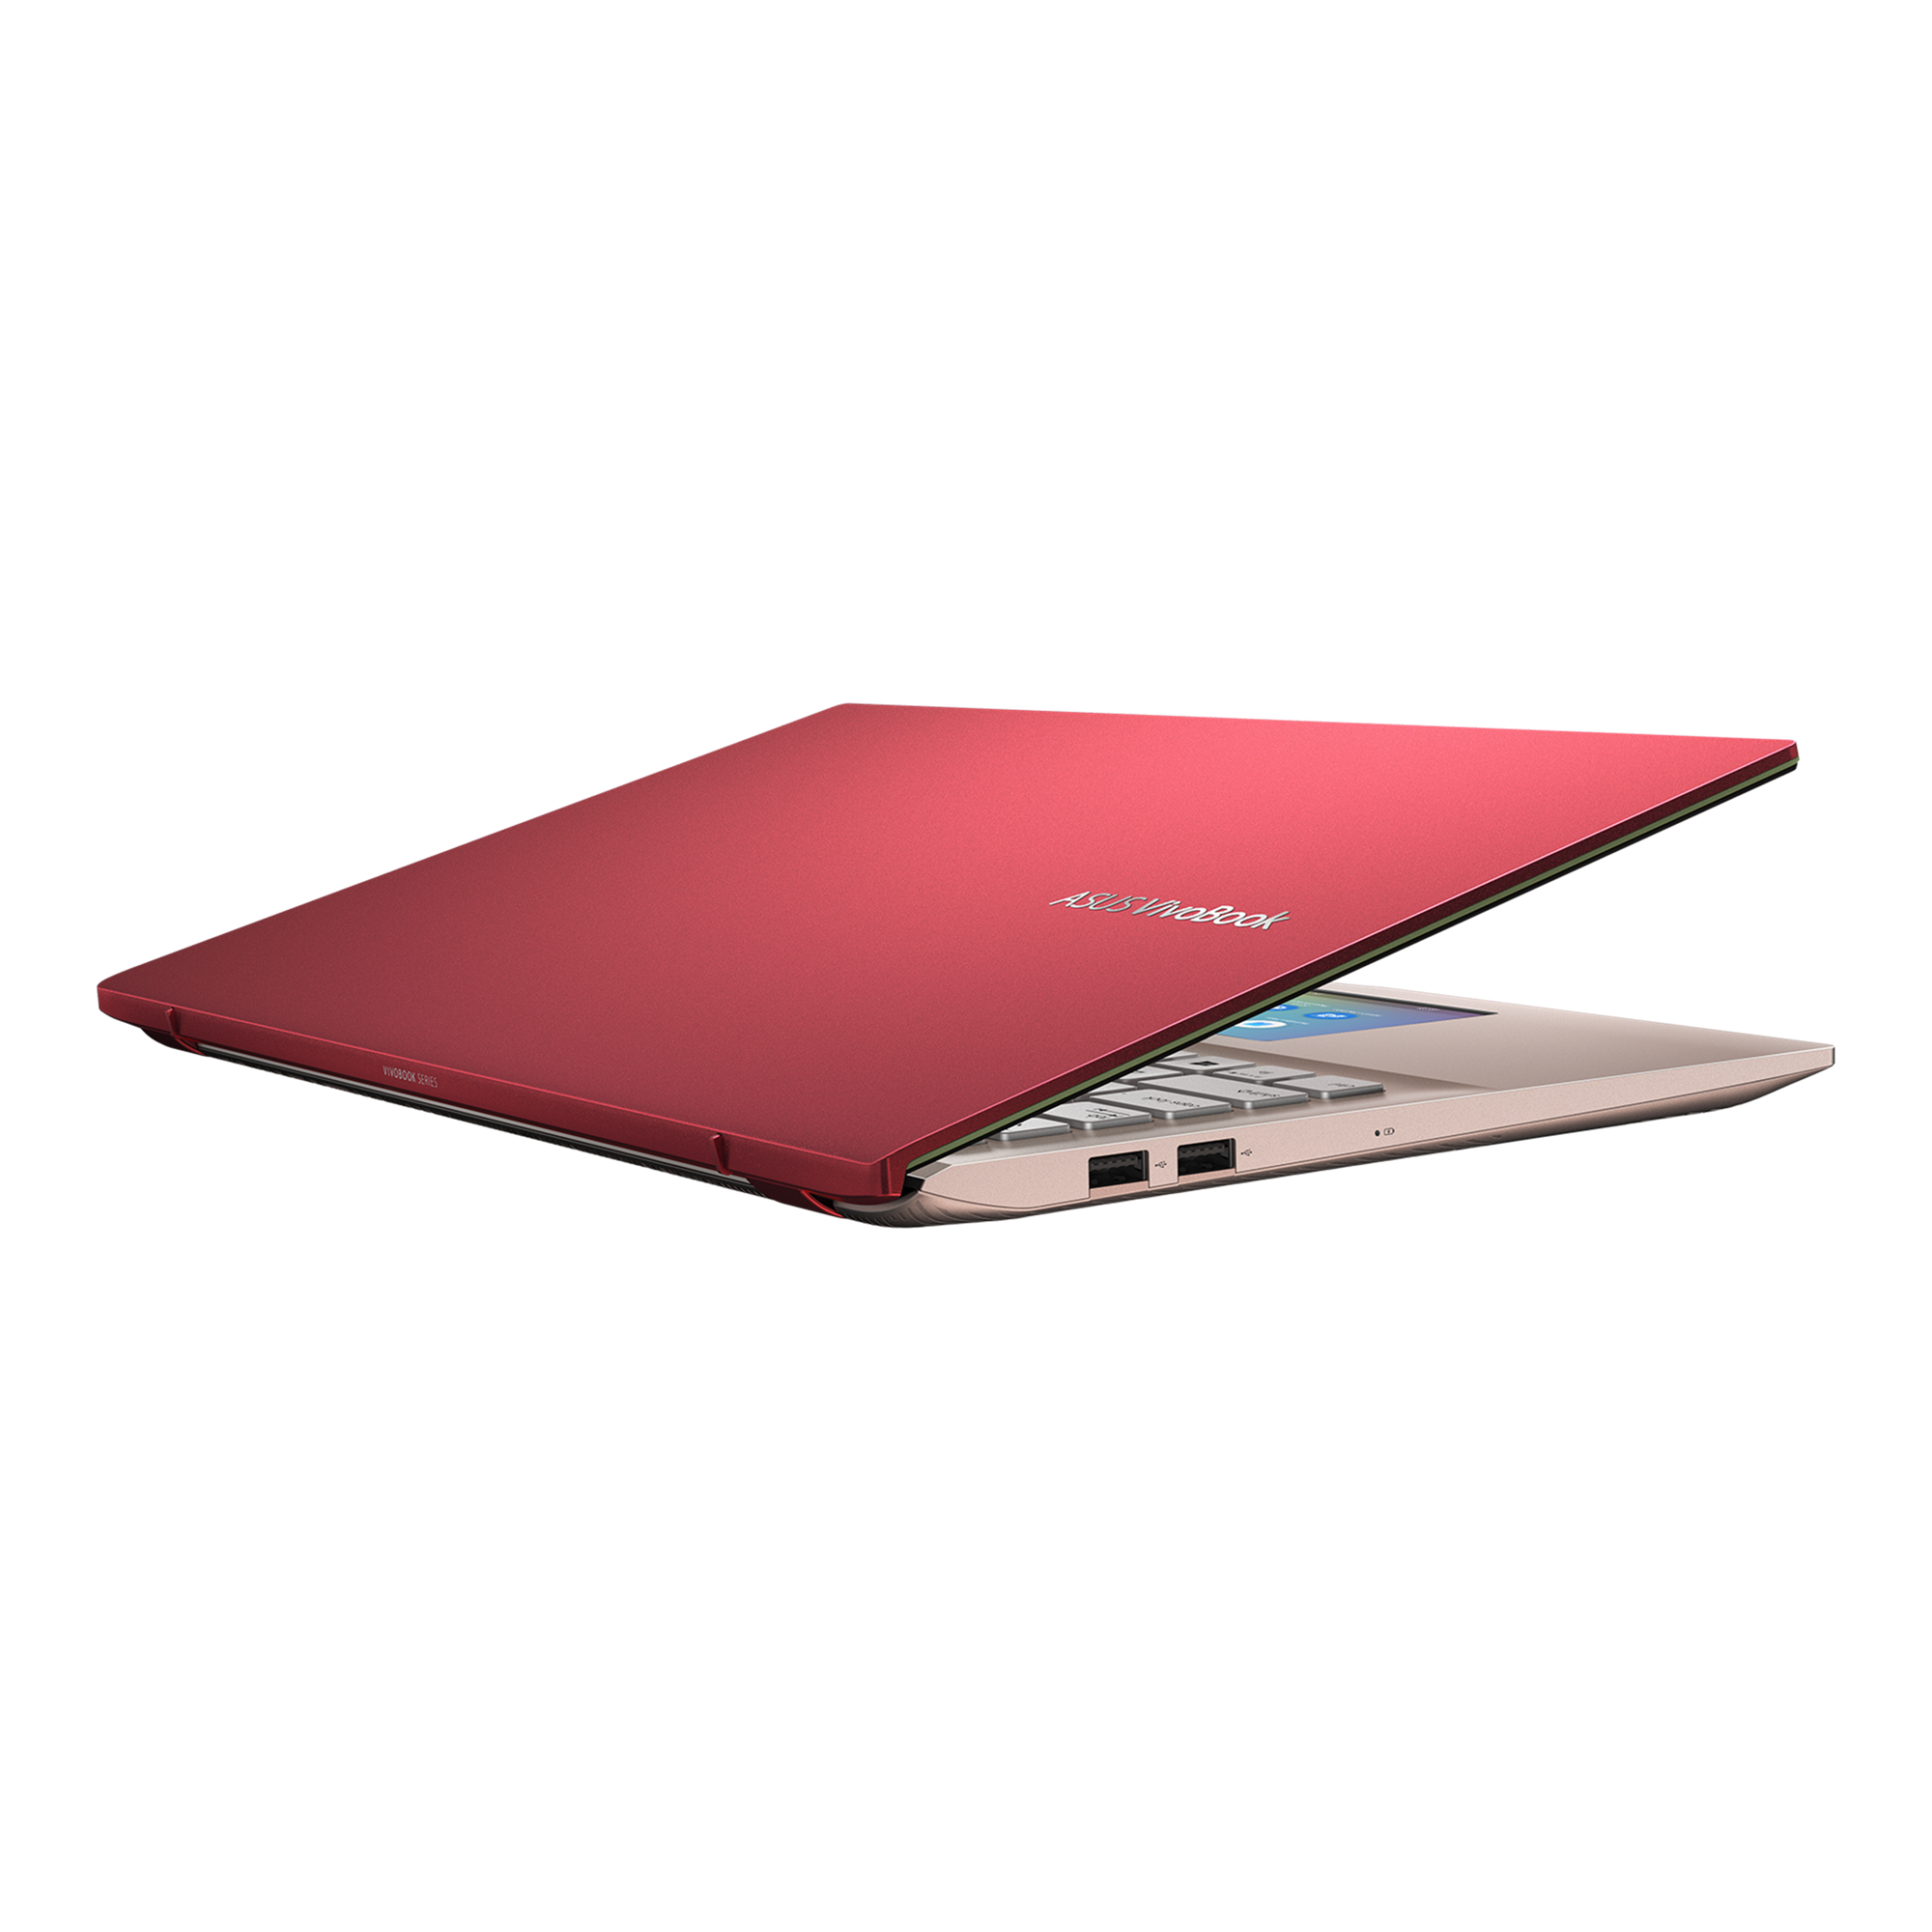 ASUS Vivobook S15 S532｜Laptops For Home｜ASUS United Kingdom